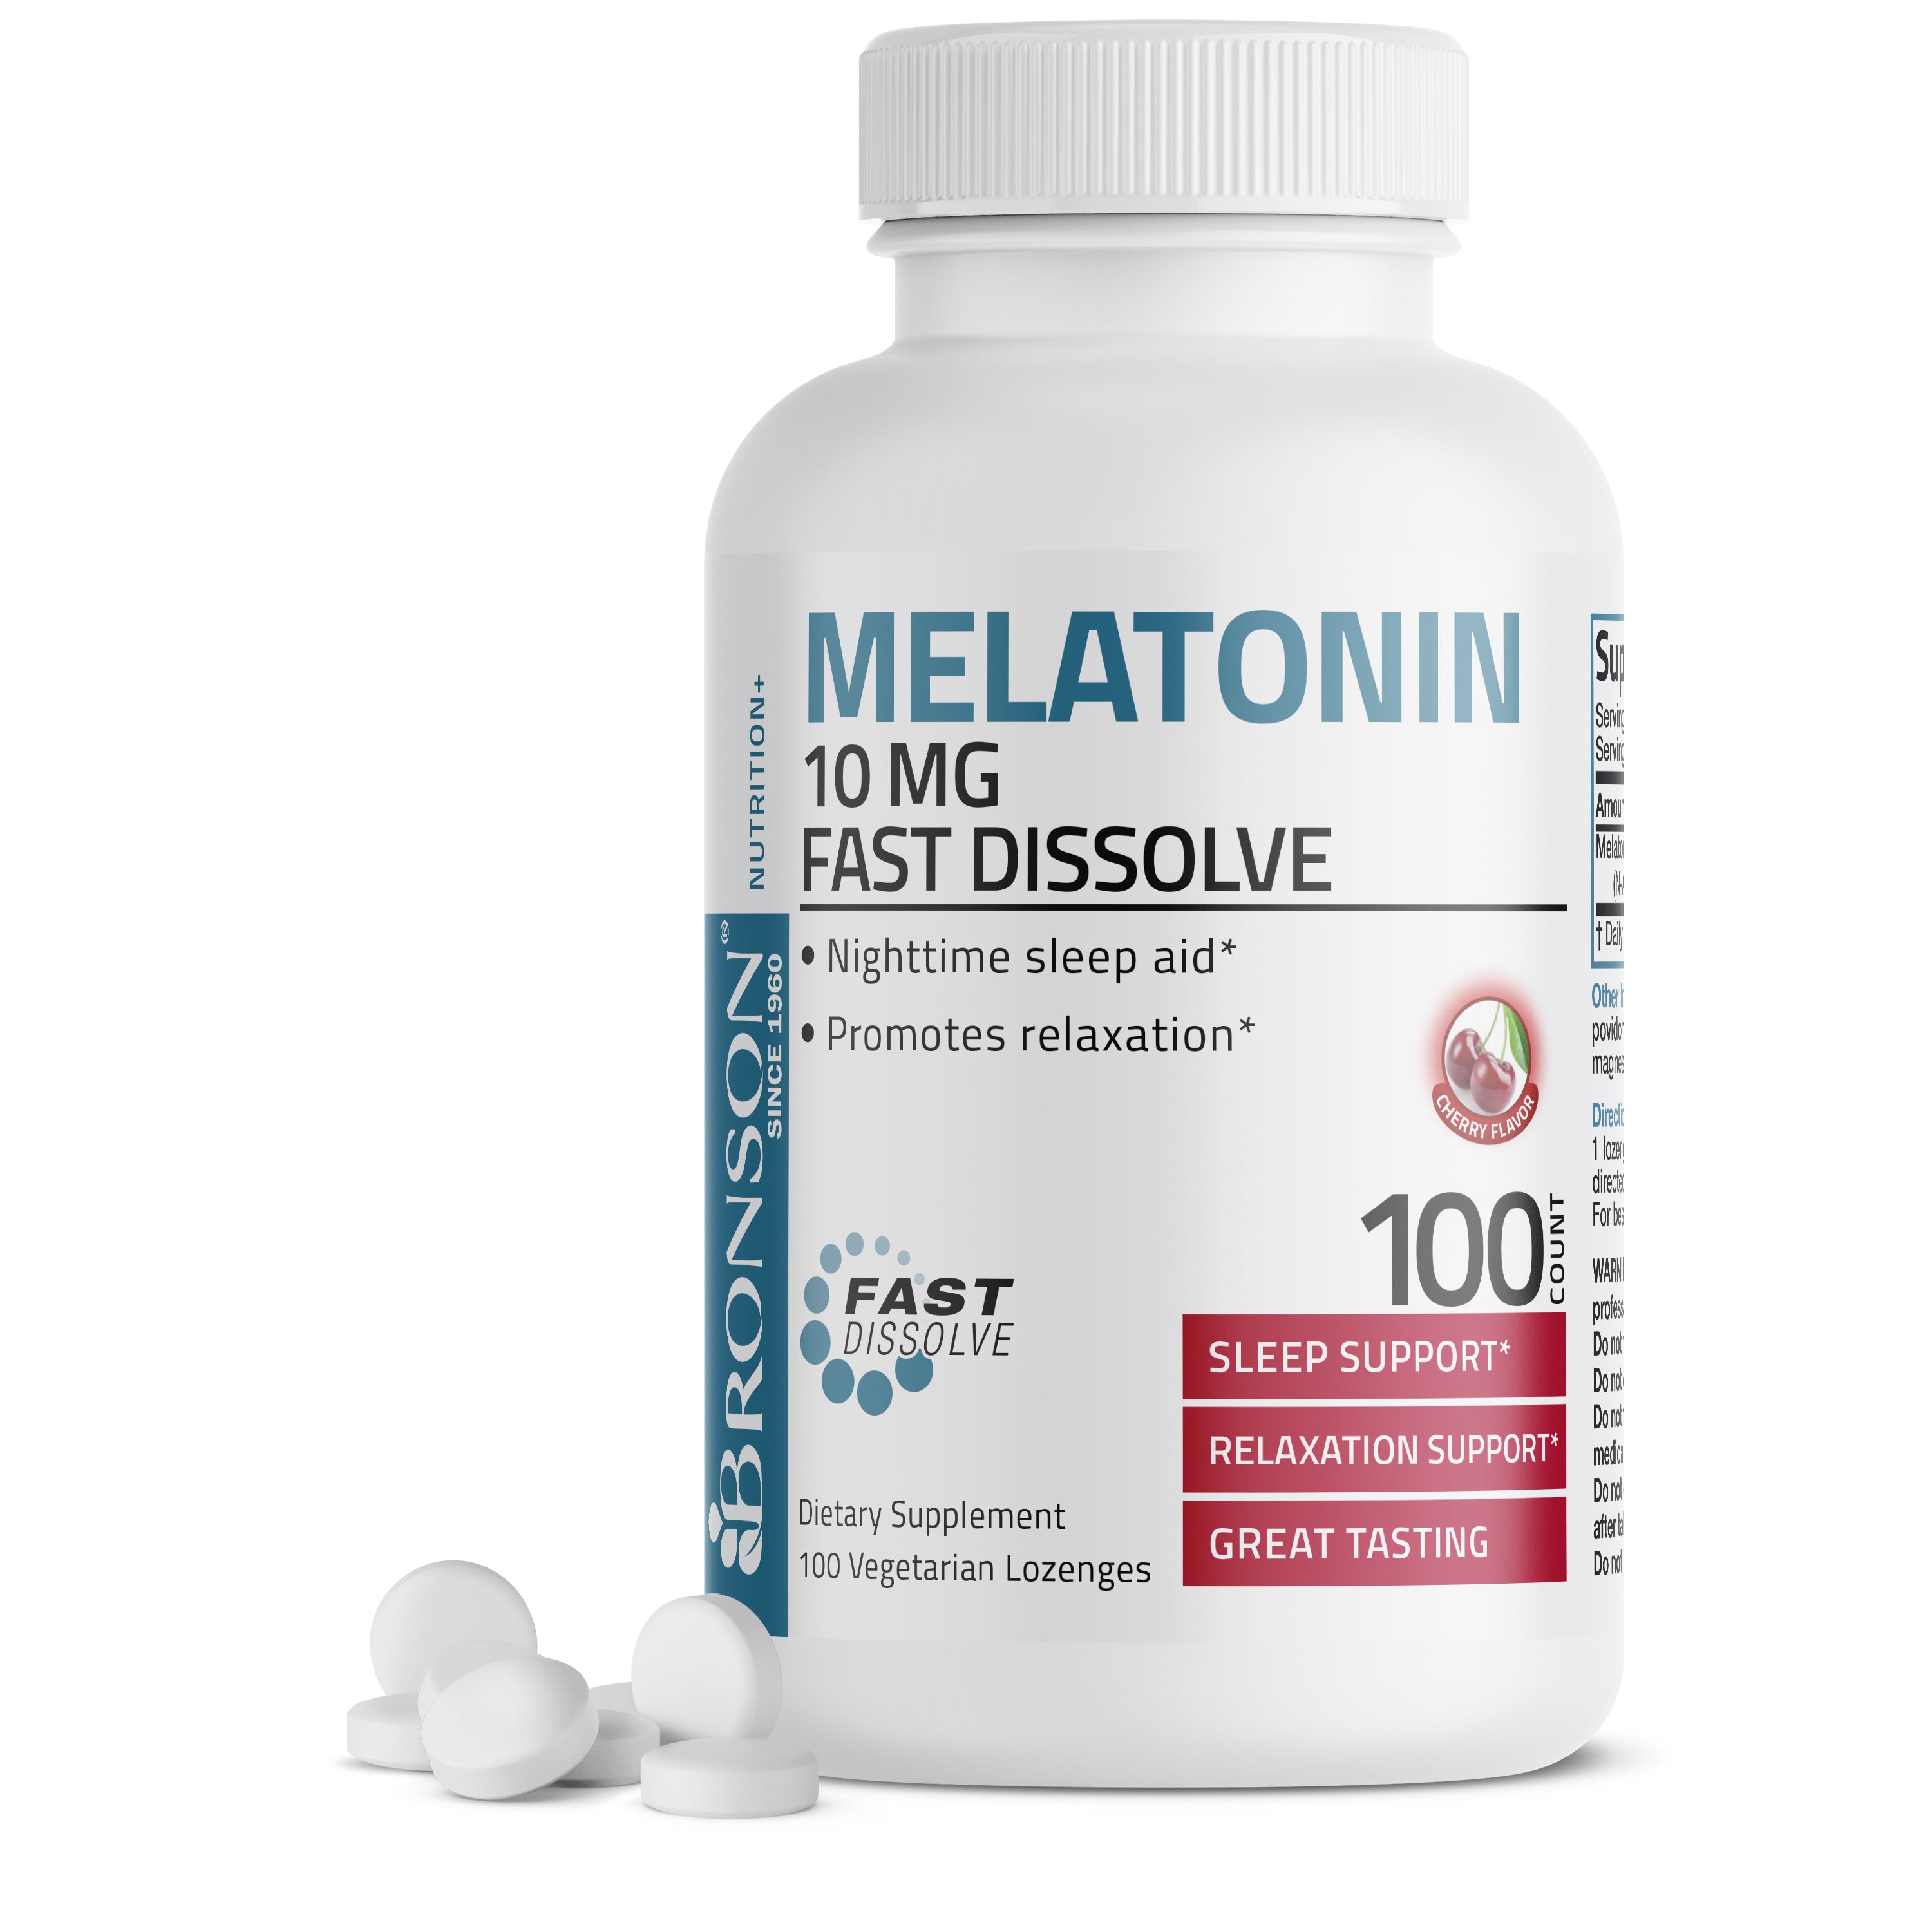 Melatonin Fast Dissolve - Cherry - 10 mg view 7 of 6